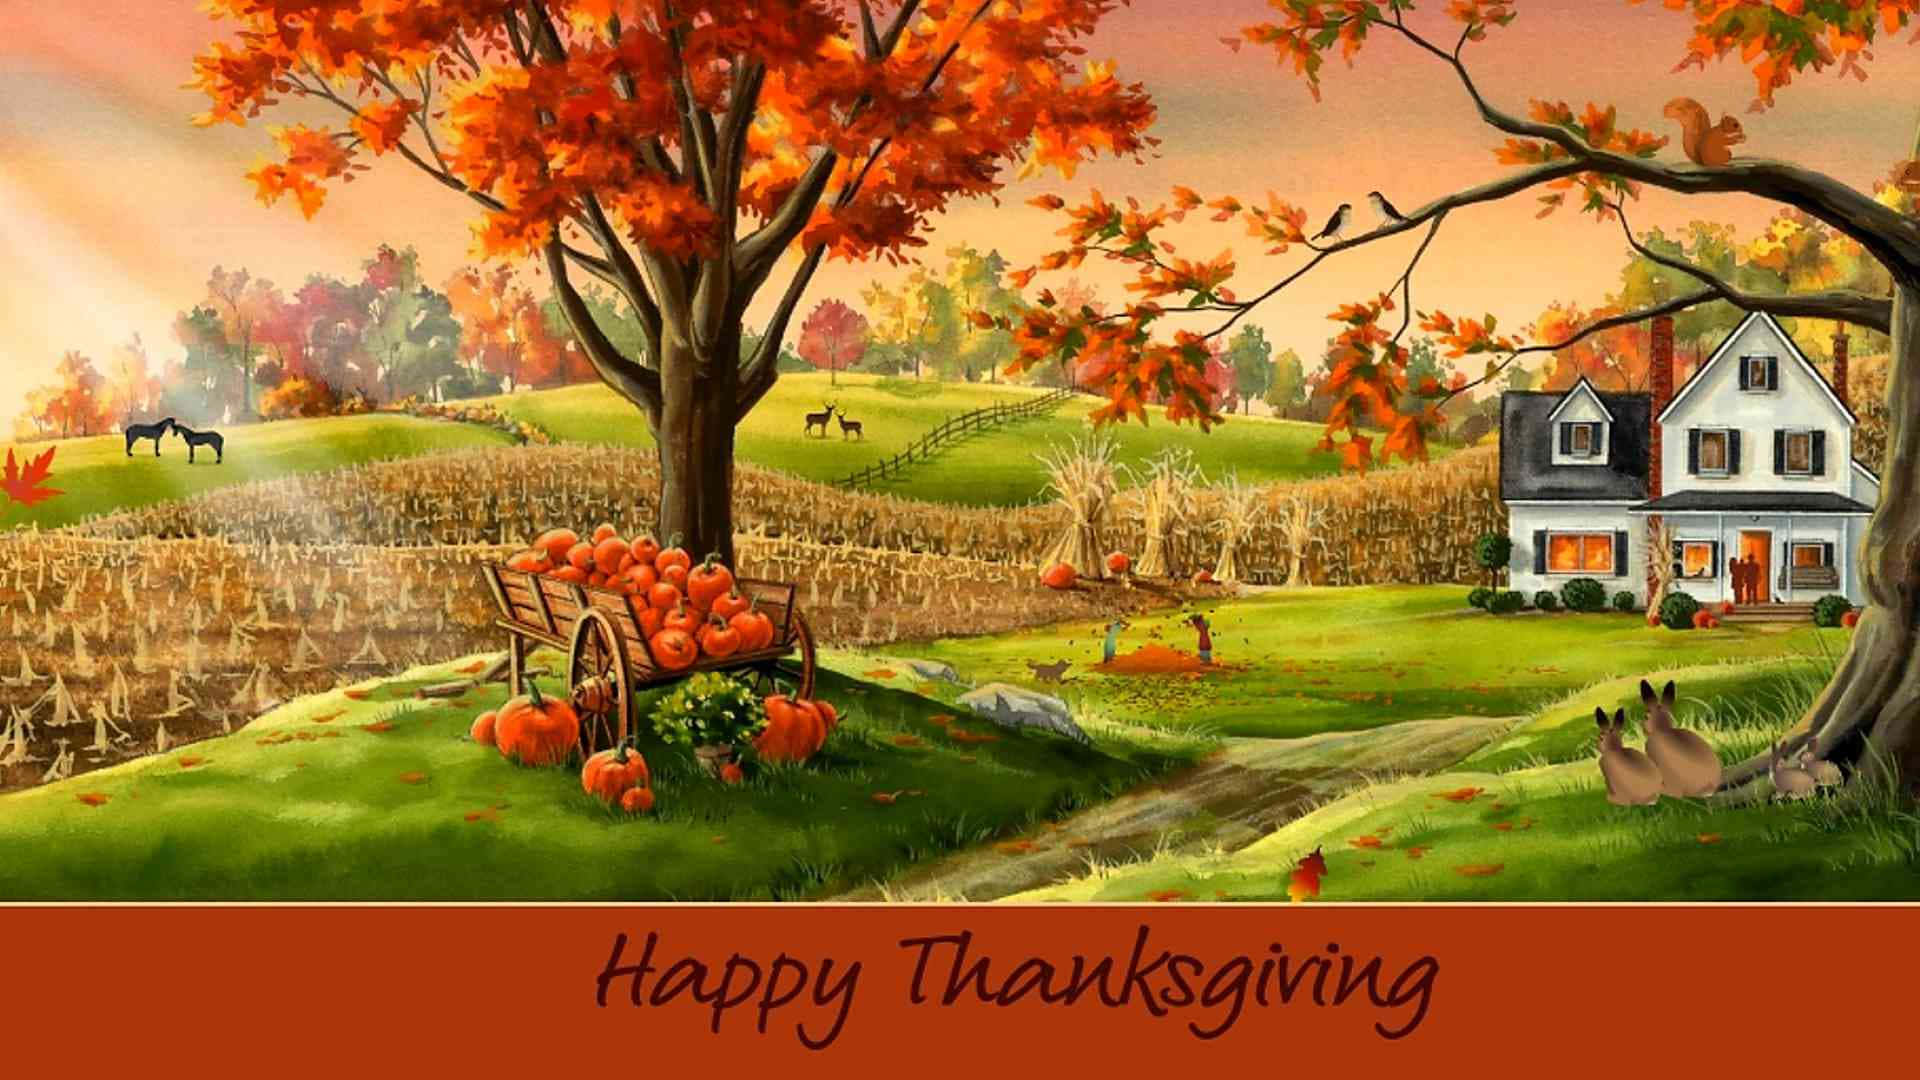 Happy Thanksgiving Homestead During The Autumn Season Wallpaper